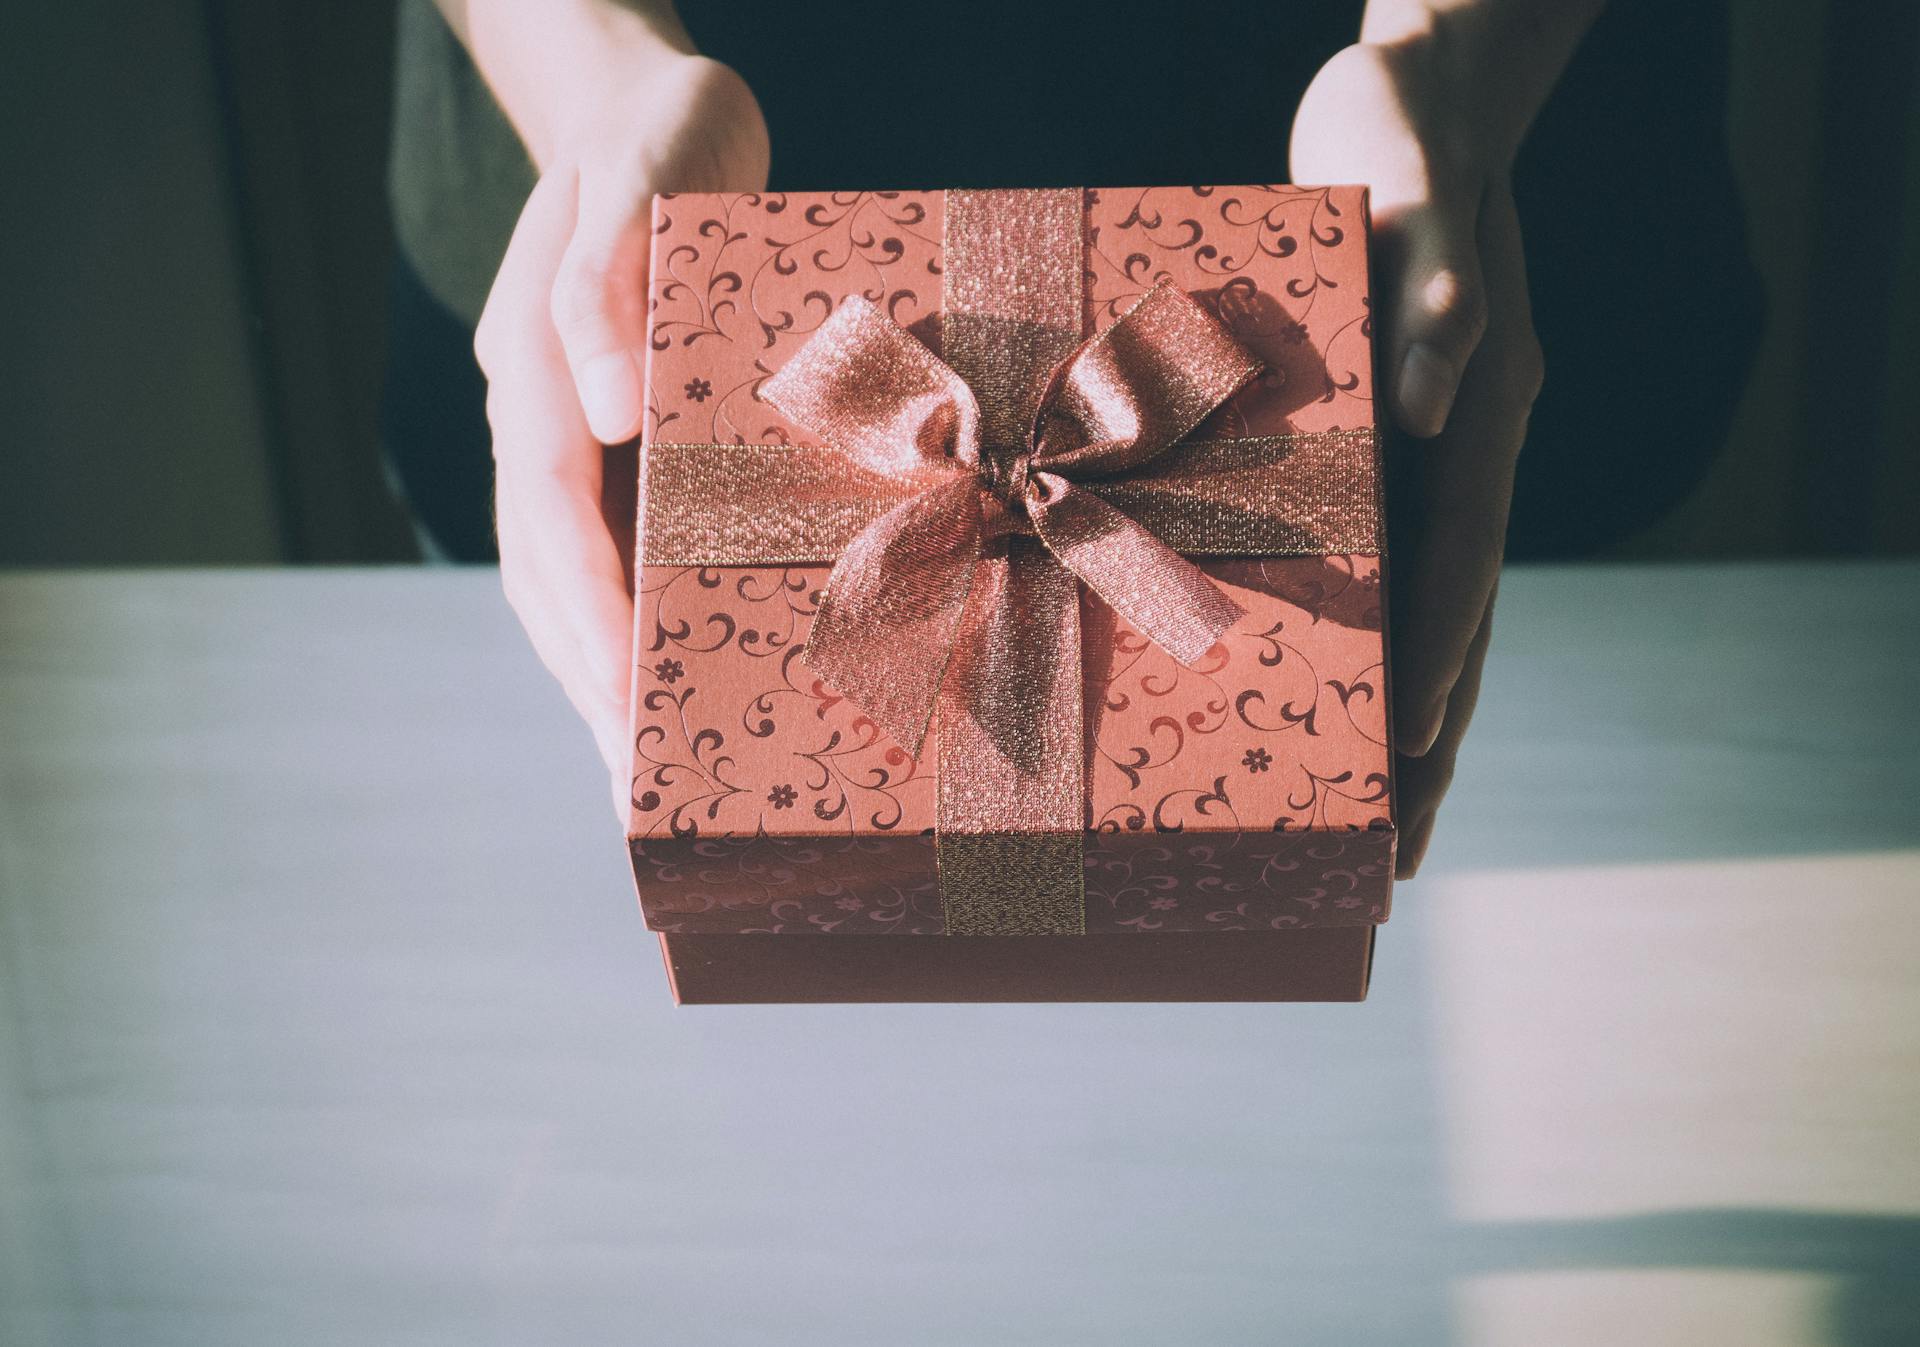 A gift box | Source: Pexels